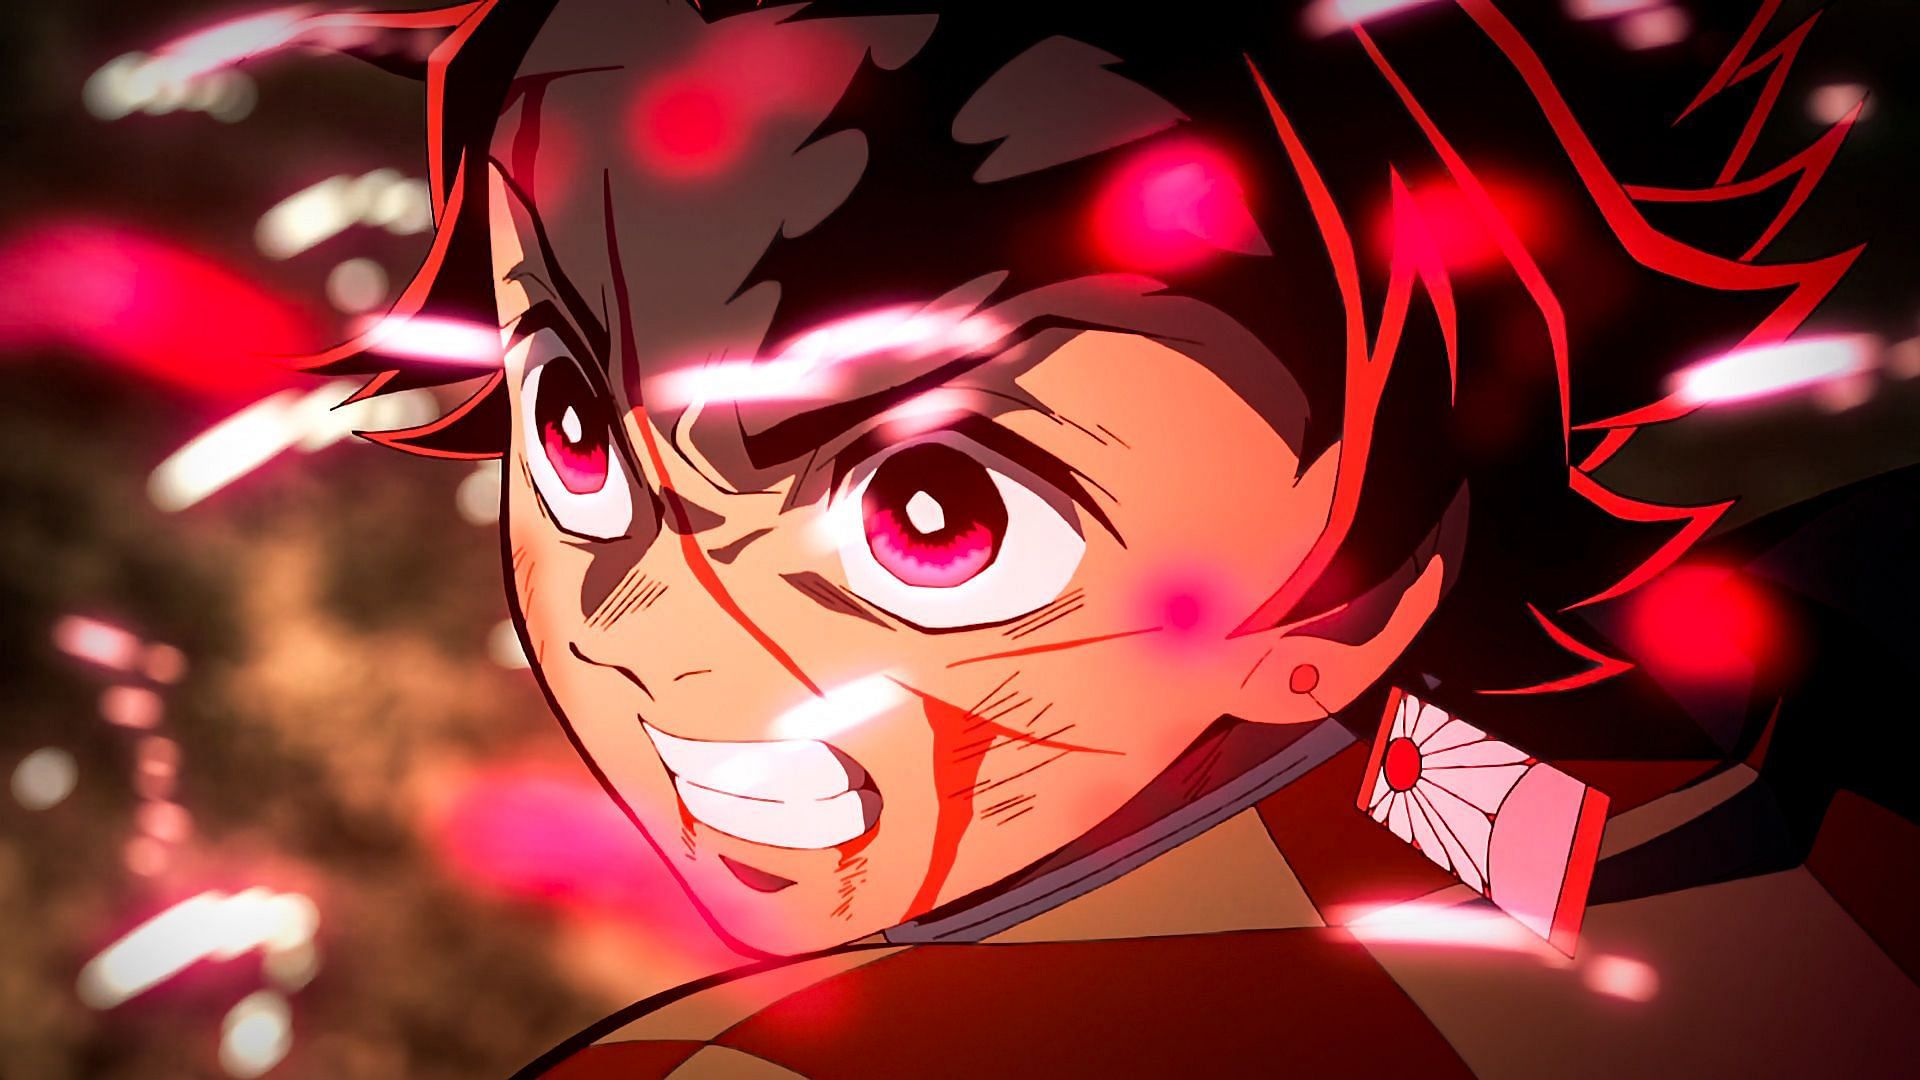 Kamado Tanjito as shown in the anime series (Image via Ufotable)